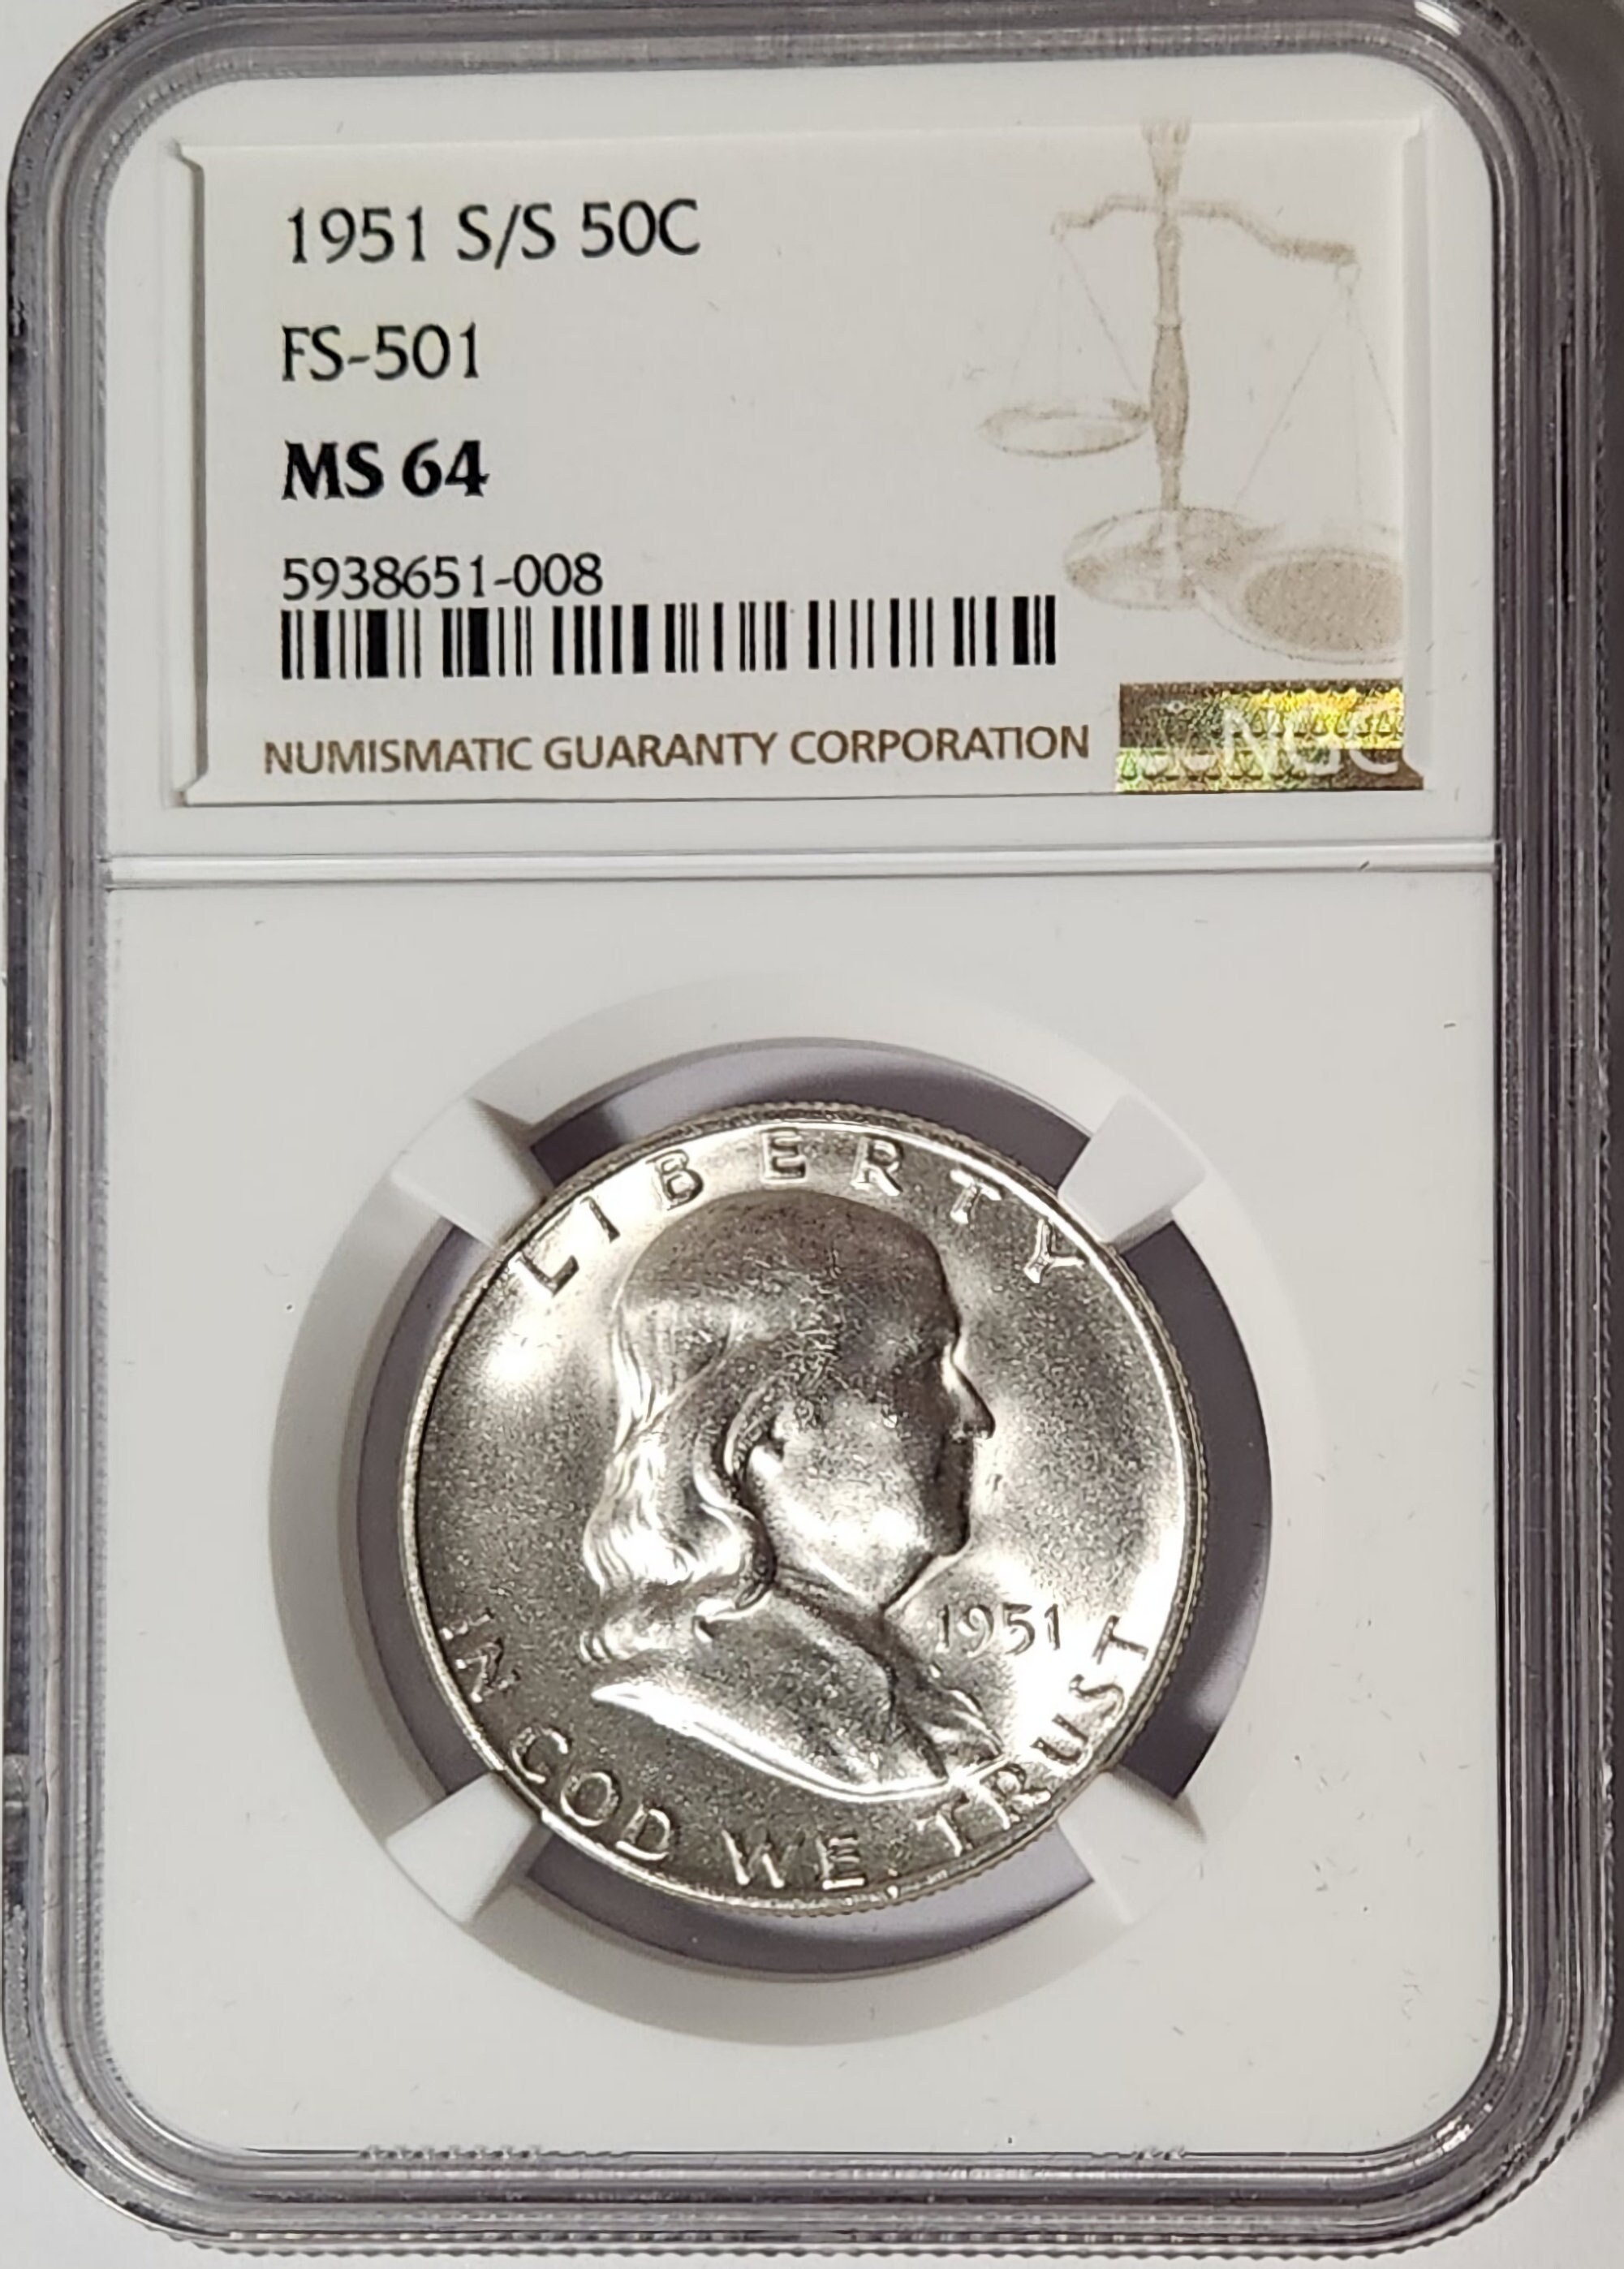 1954 D 50 Cent Franklin Silver Half Dollar Coin BU Fifty Cents 50c Coin  Denver